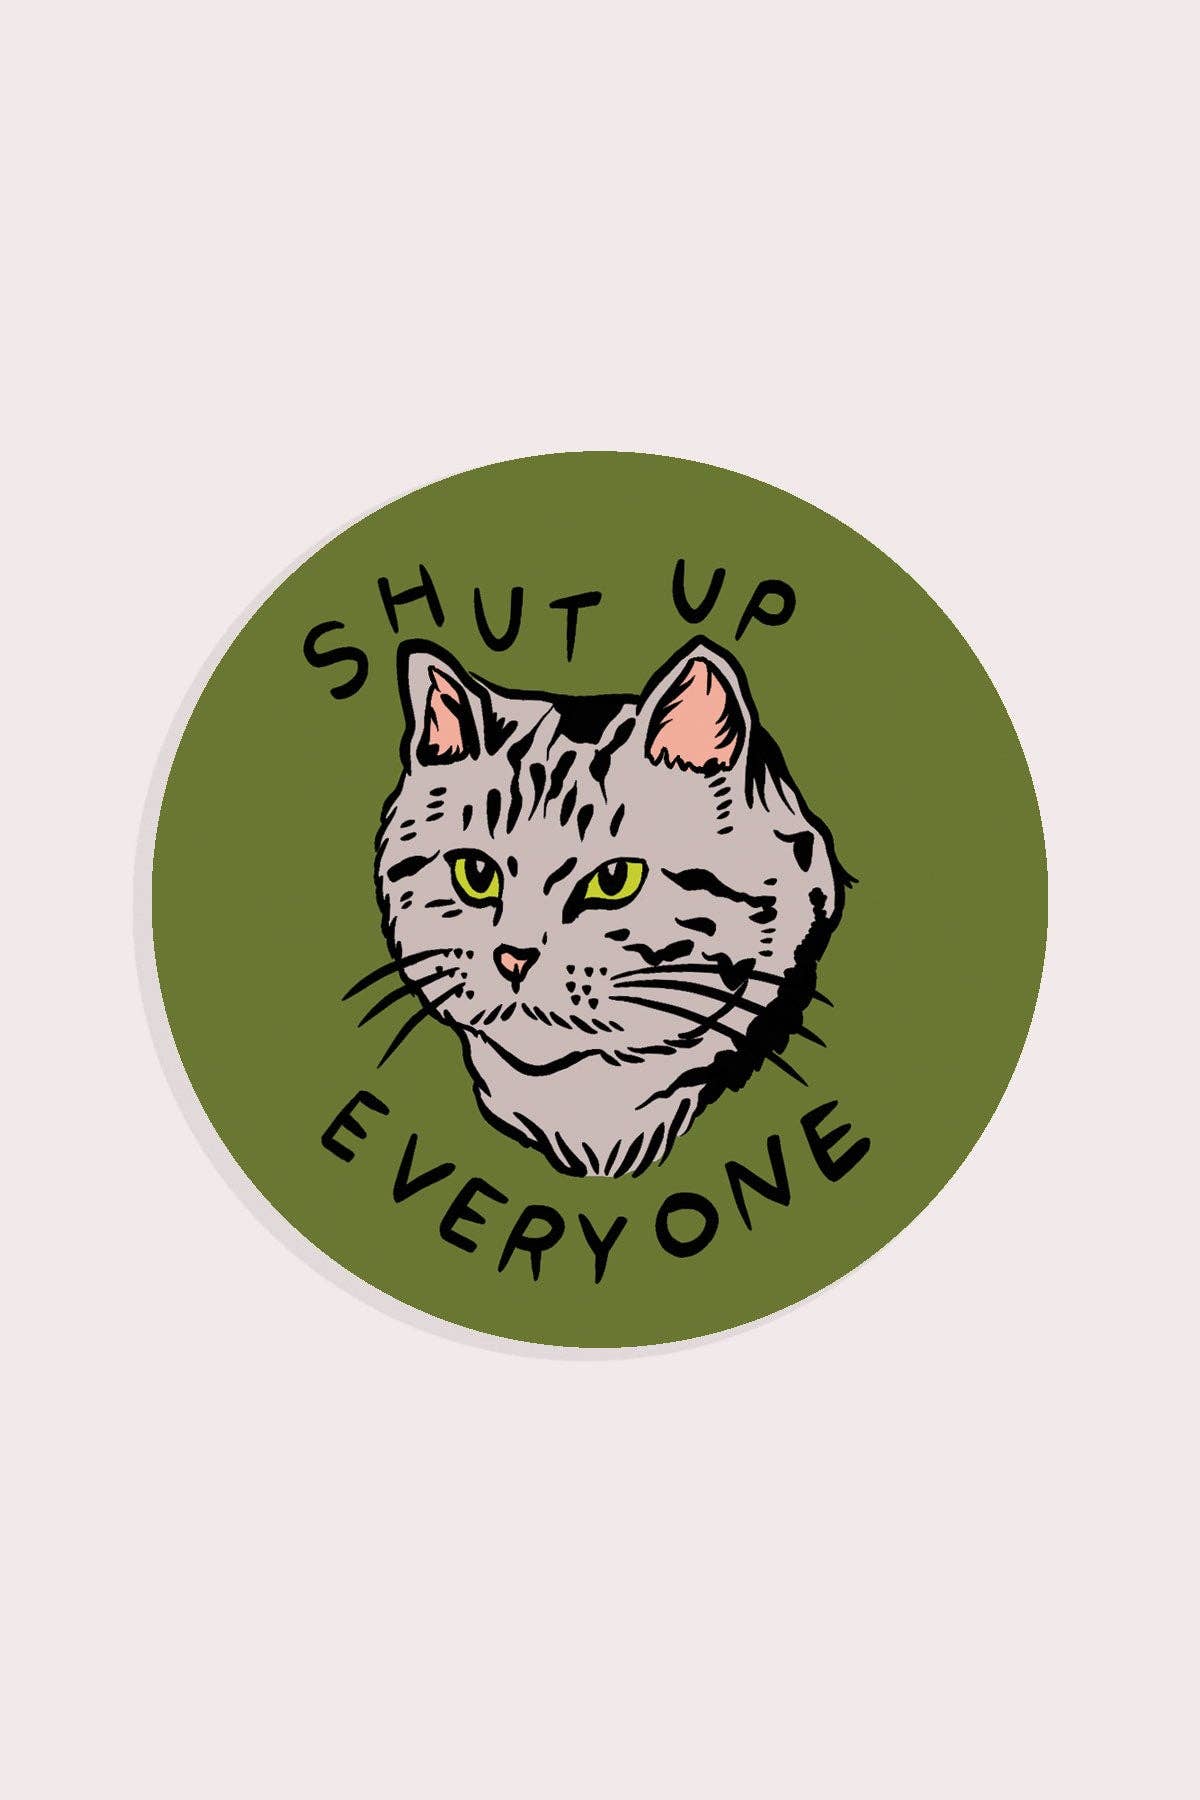 Shut Up Everyone Vinyl Sticker